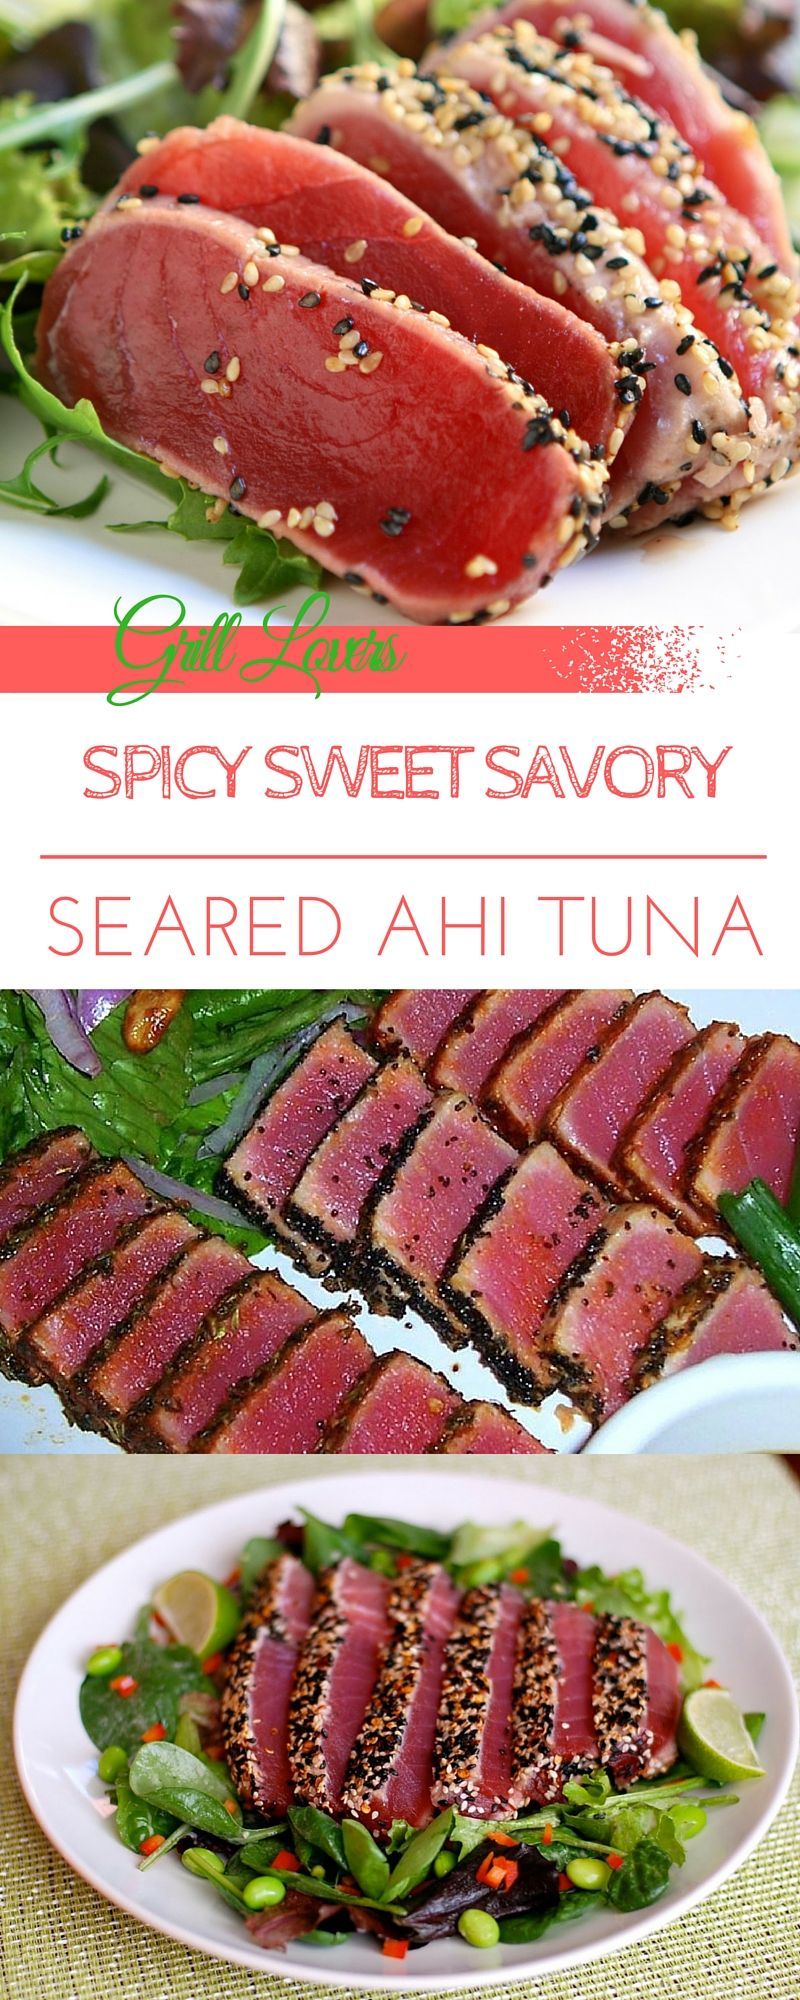 PrintGrill Lovers’ Spicy Sweet Savory Seared Ahi Tuna Recipe Ingredients• 2 lbs…